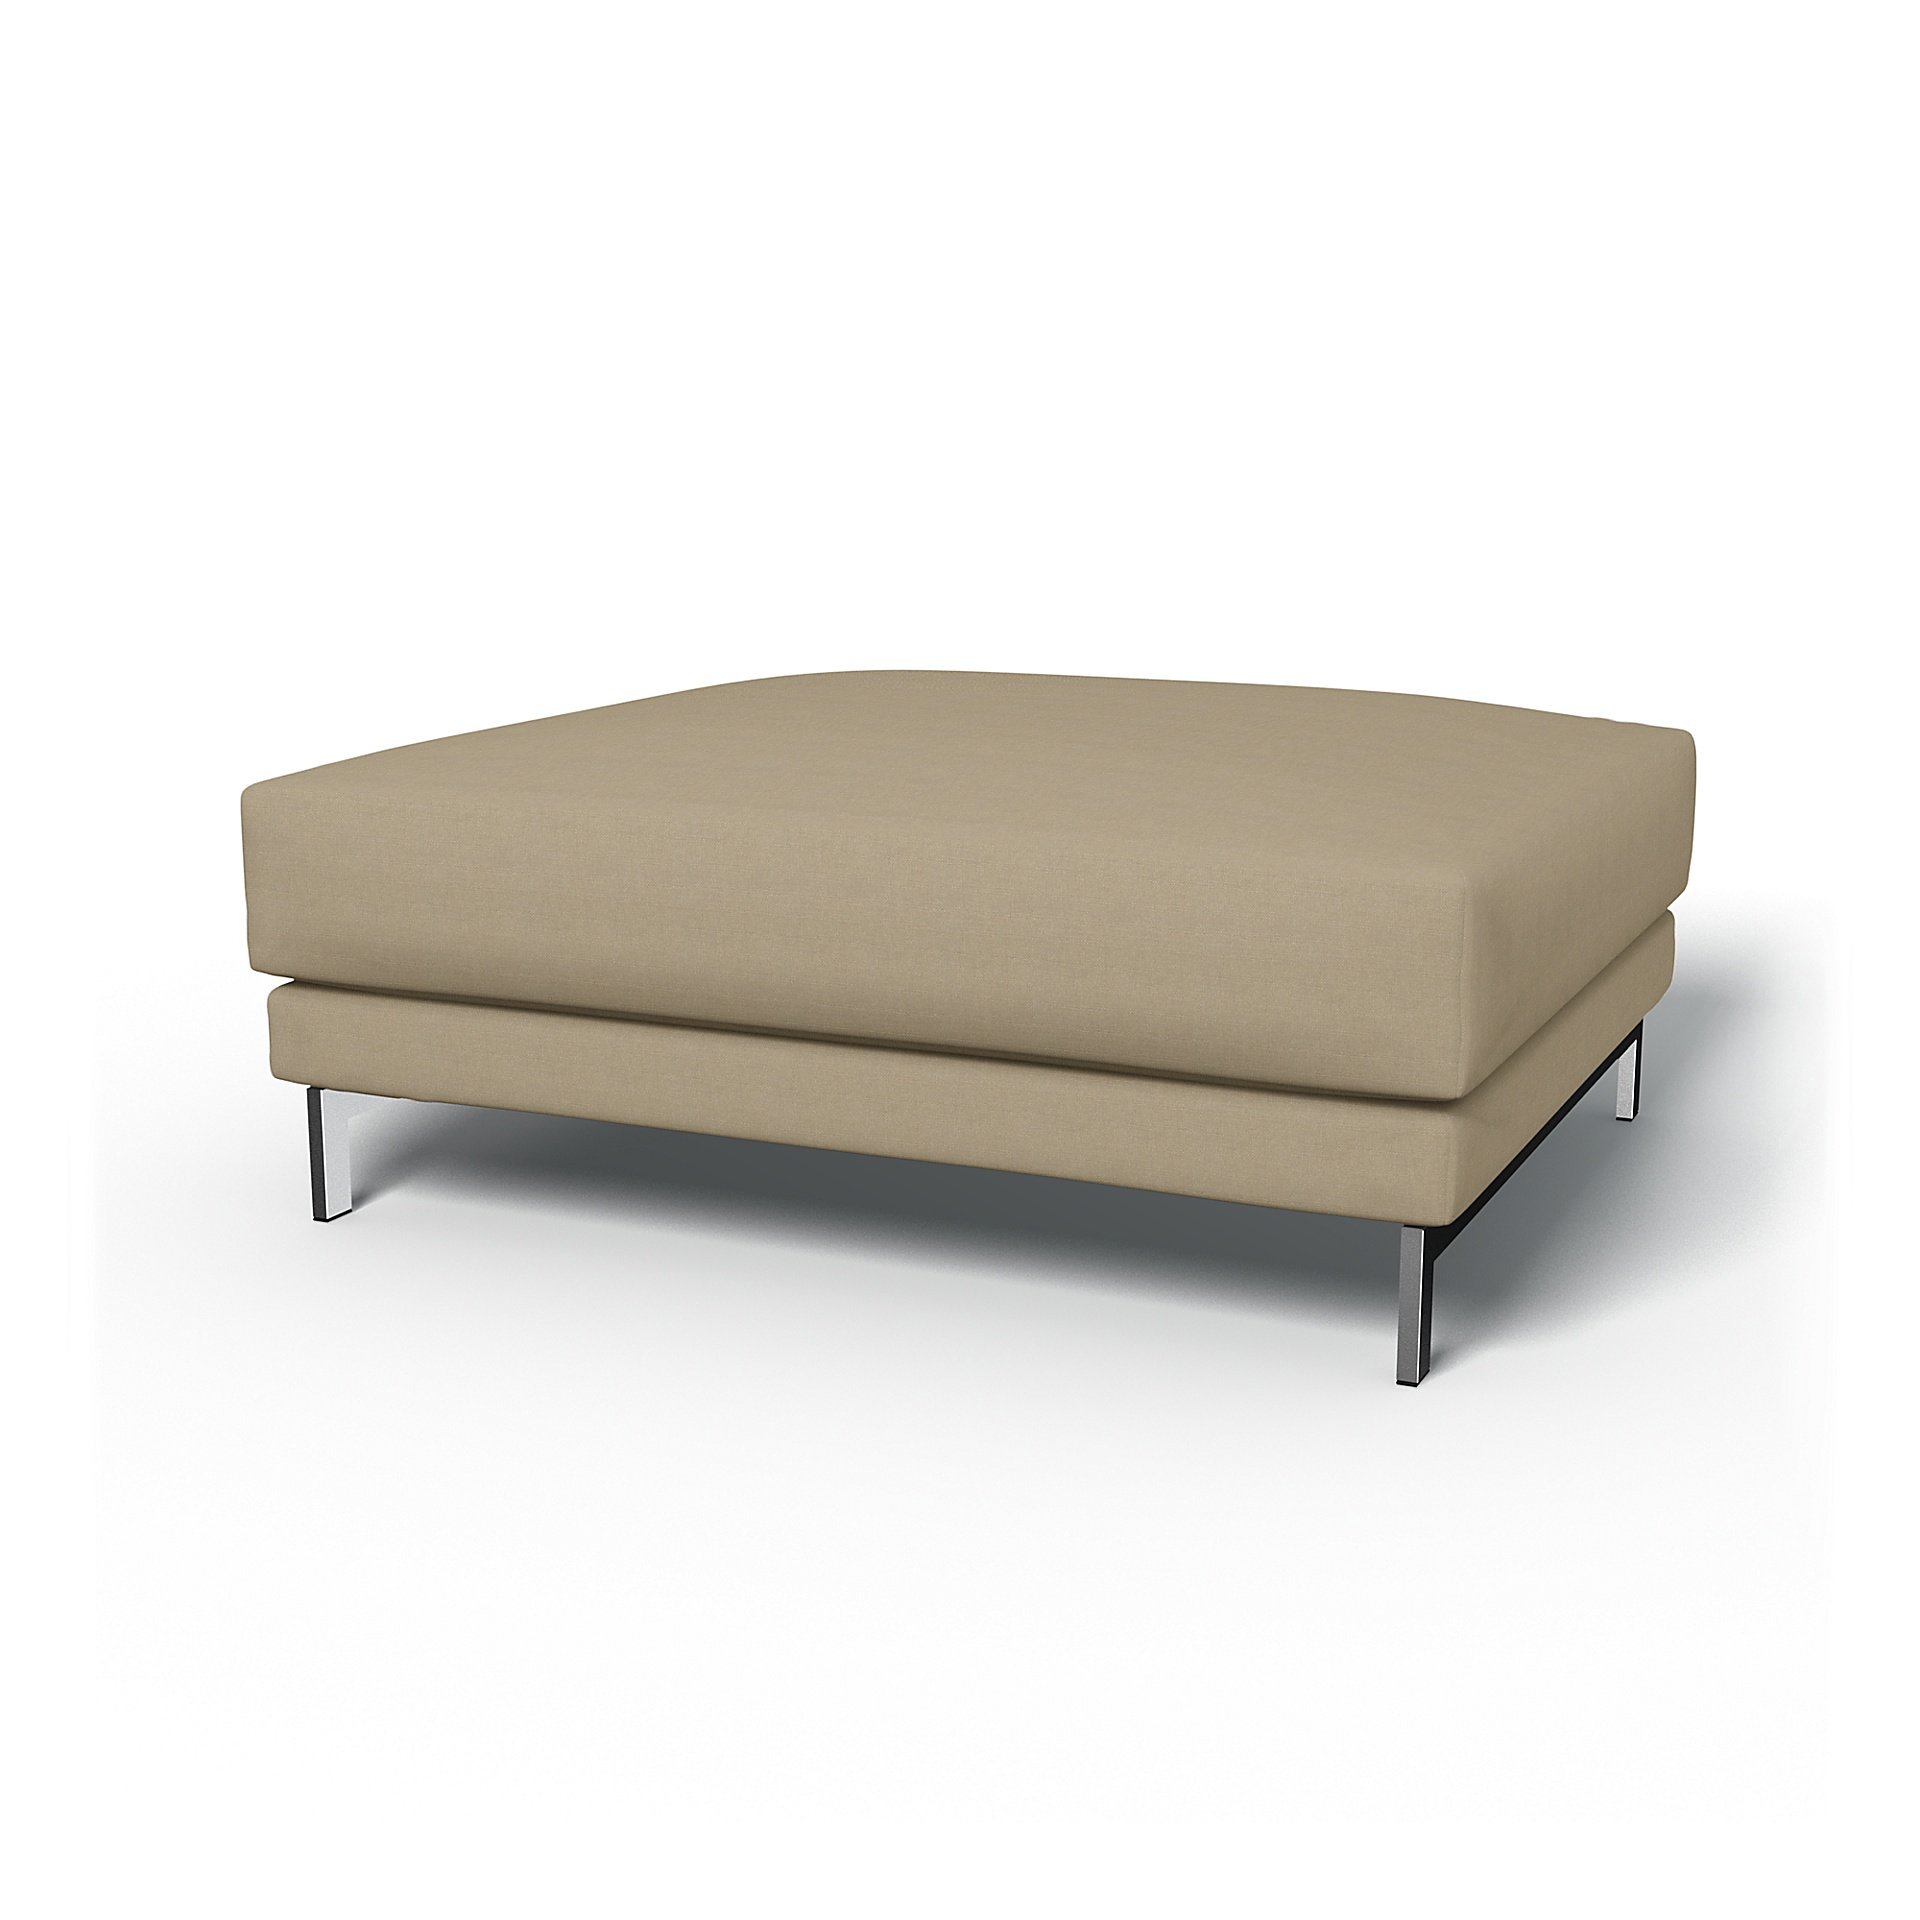 IKEA - Nockeby Footstool Cover, Tan, Linen - Bemz